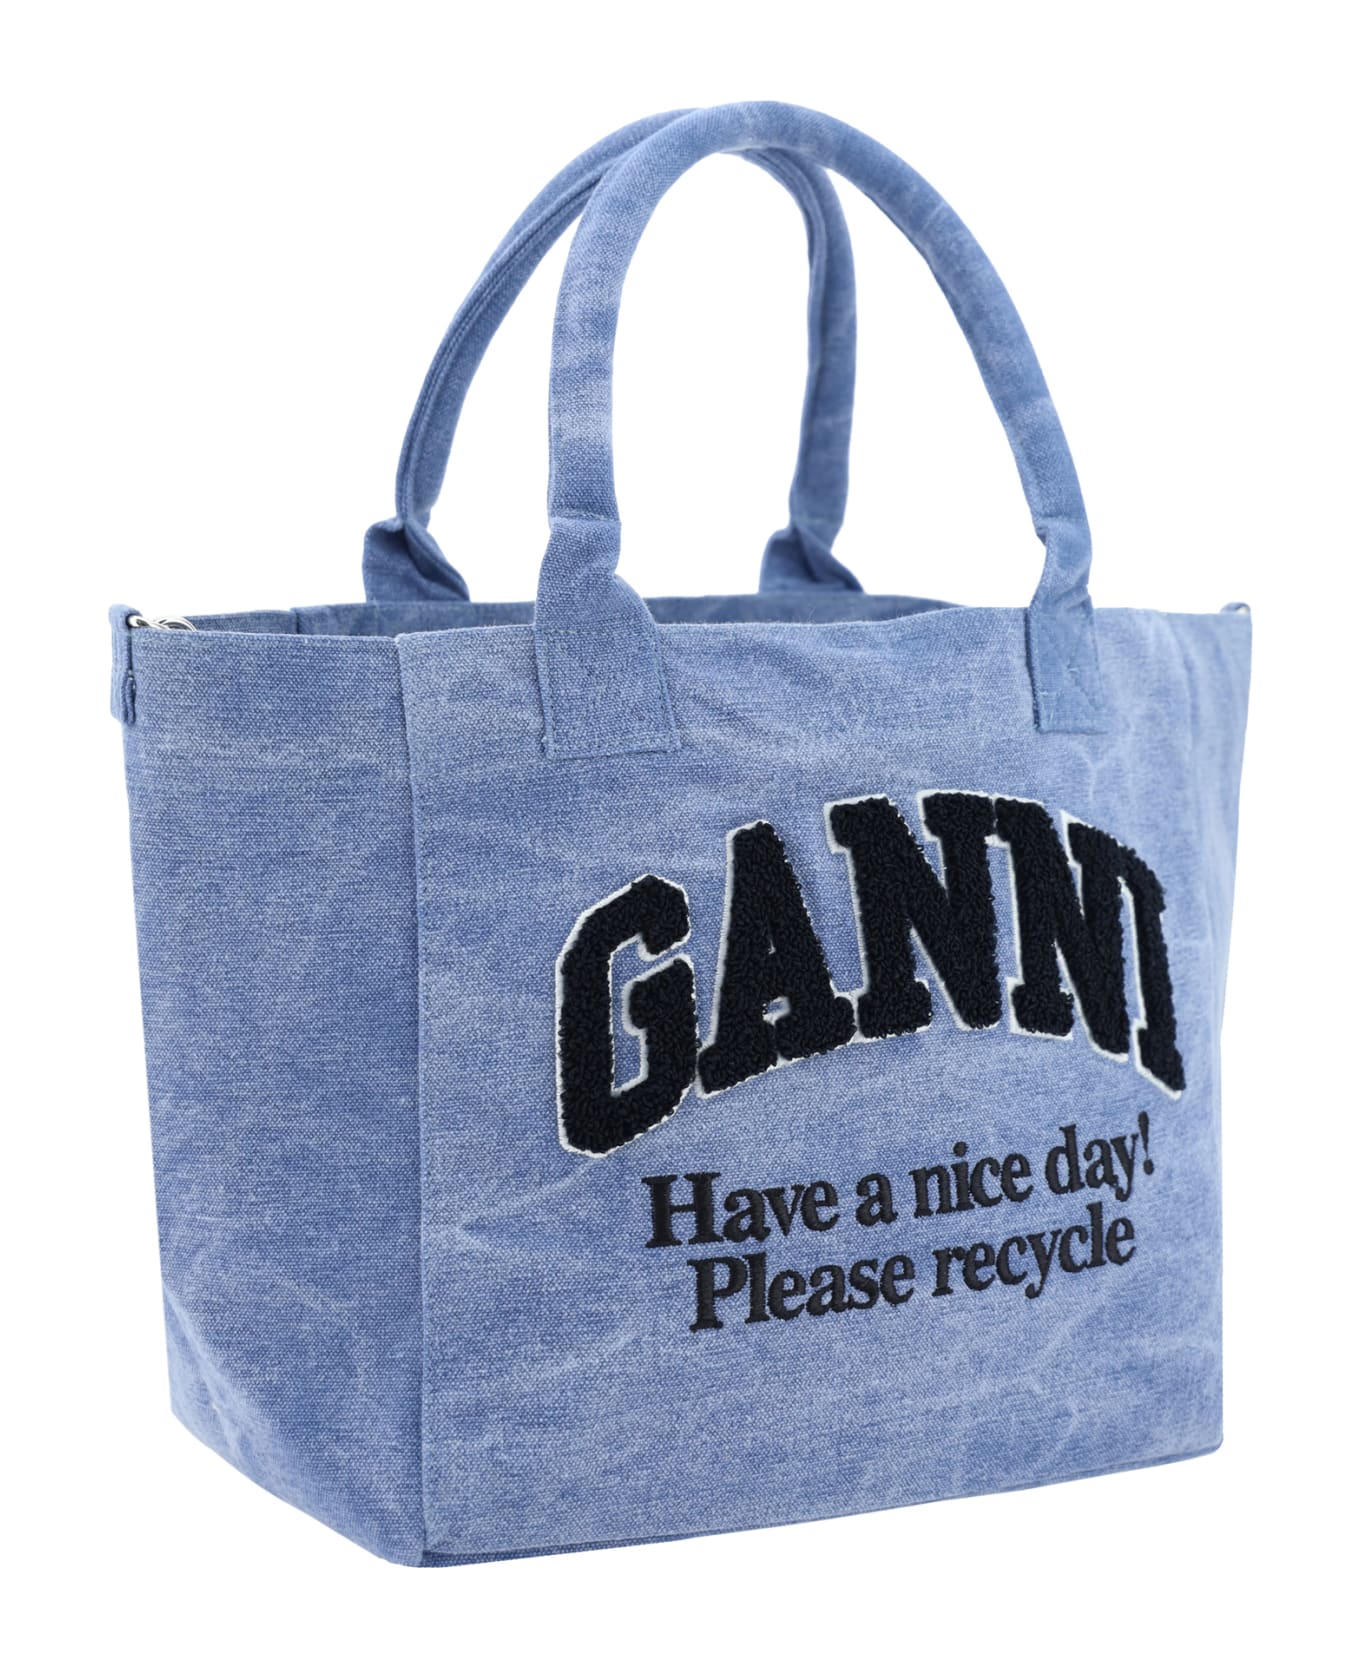 Ganni Easy Shopper Handbag - Light Blue Vintage